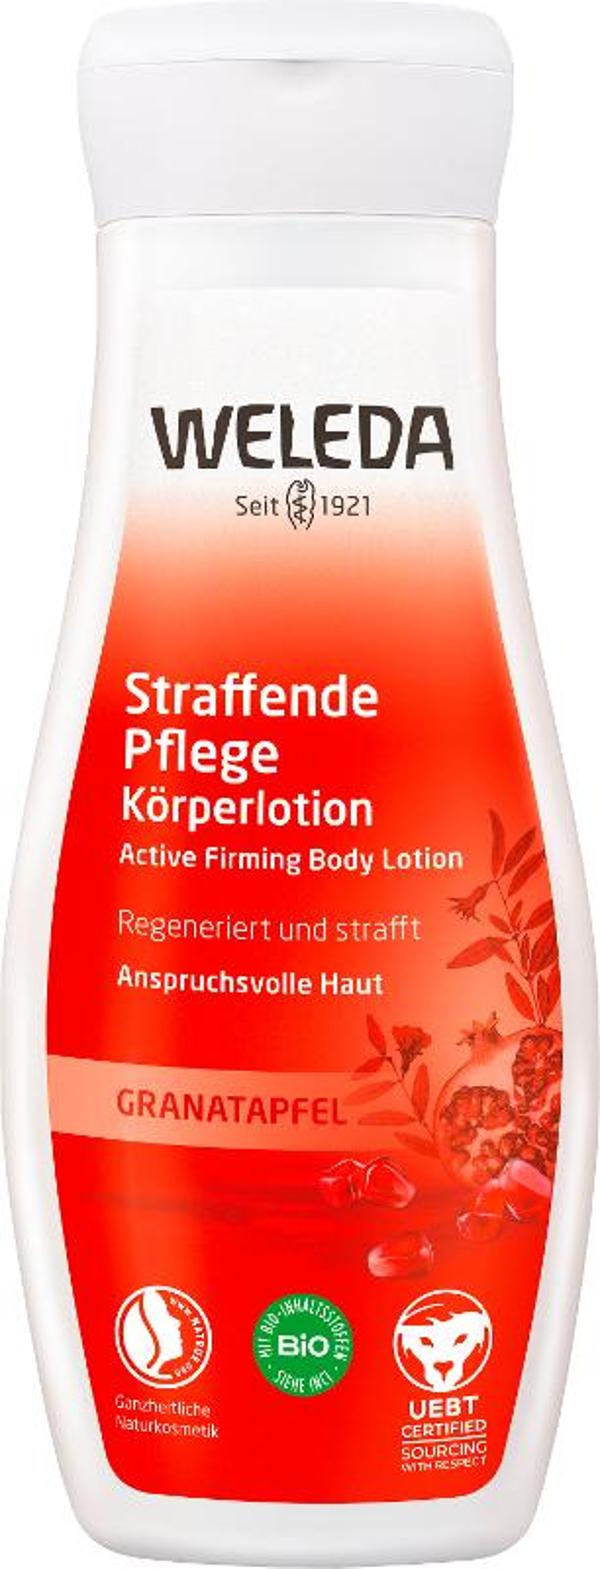 Produktfoto zu Granatapfel Straffende Pflege Körperlotion - 200ml